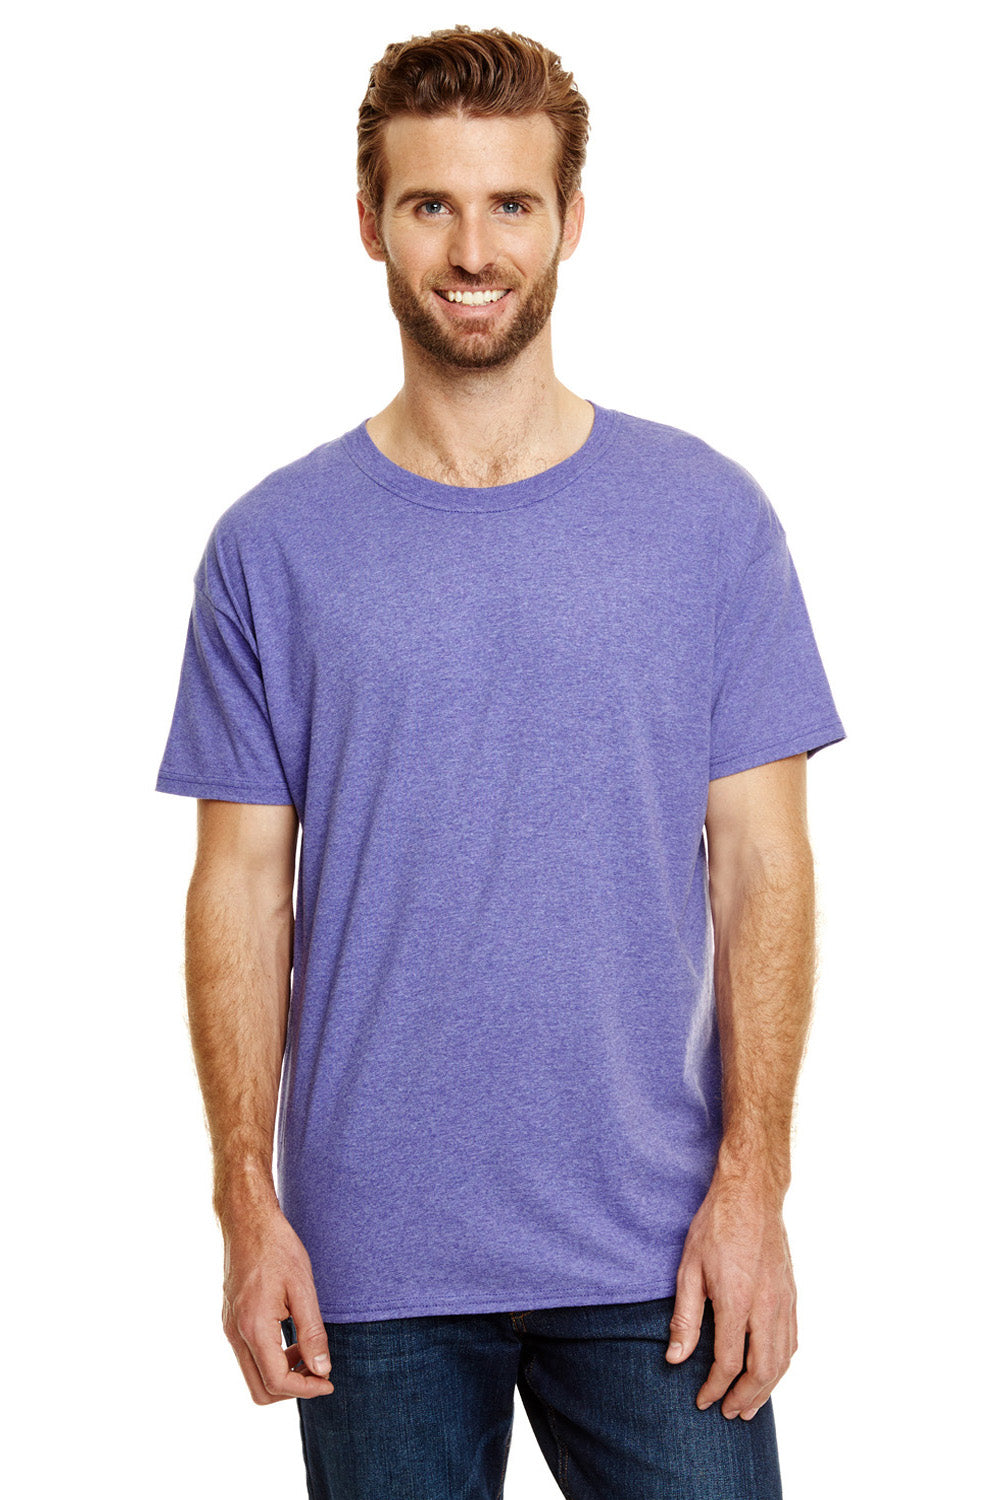 Hanes 42TB Mens X-Temp FreshIQ Moisture Wicking Short Sleeve Crewneck T-Shirt Grape Purple Front